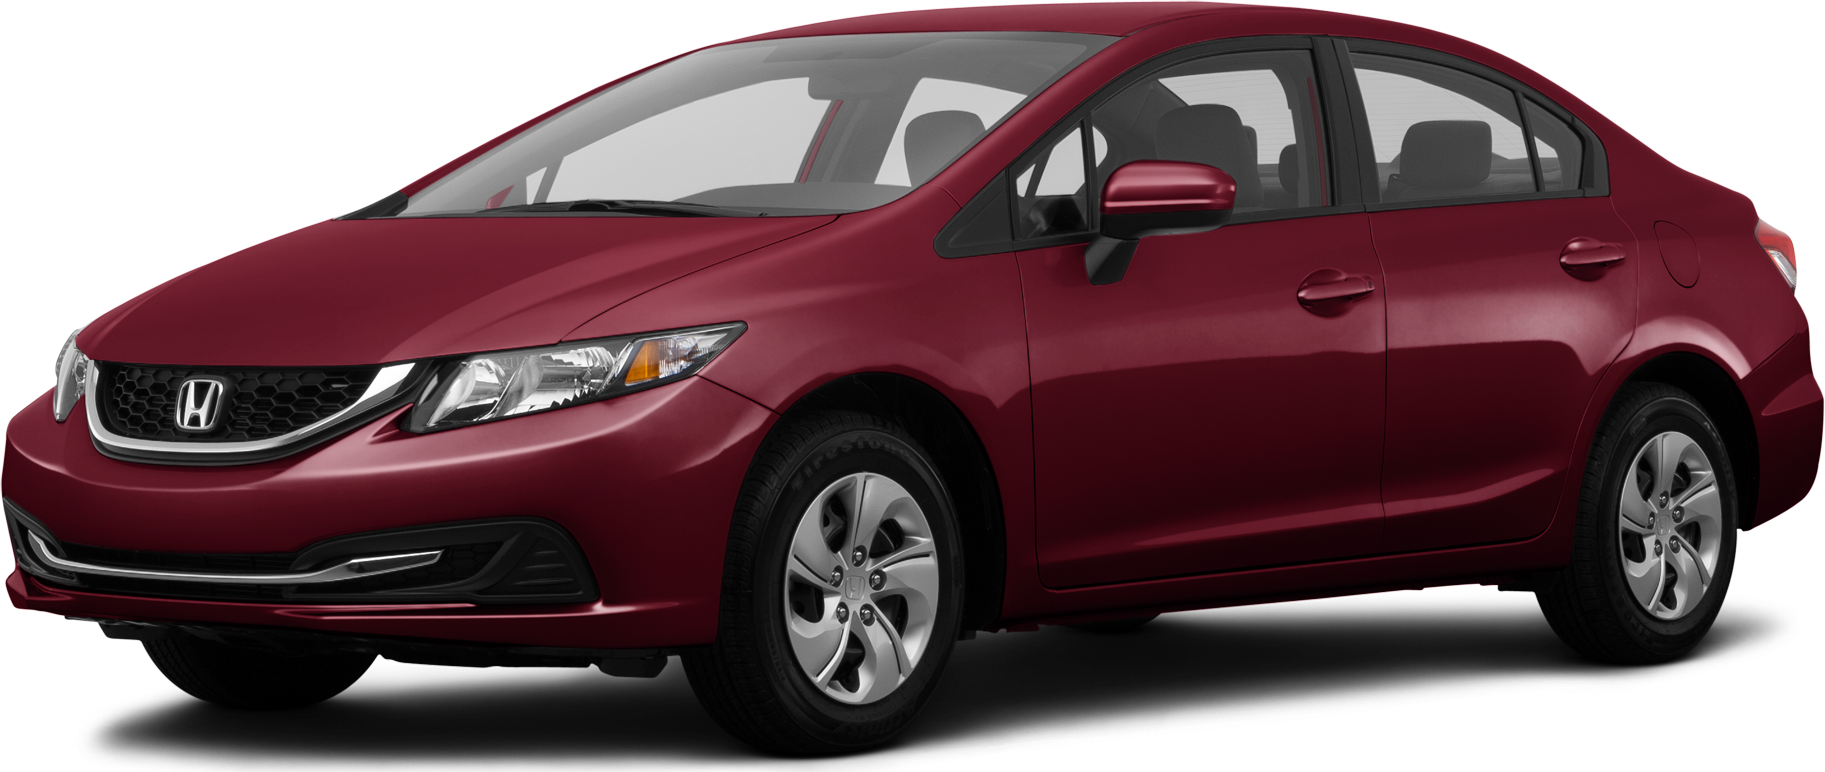 2014 Honda Civic Price, Value, Ratings & Reviews Kelley Blue Book